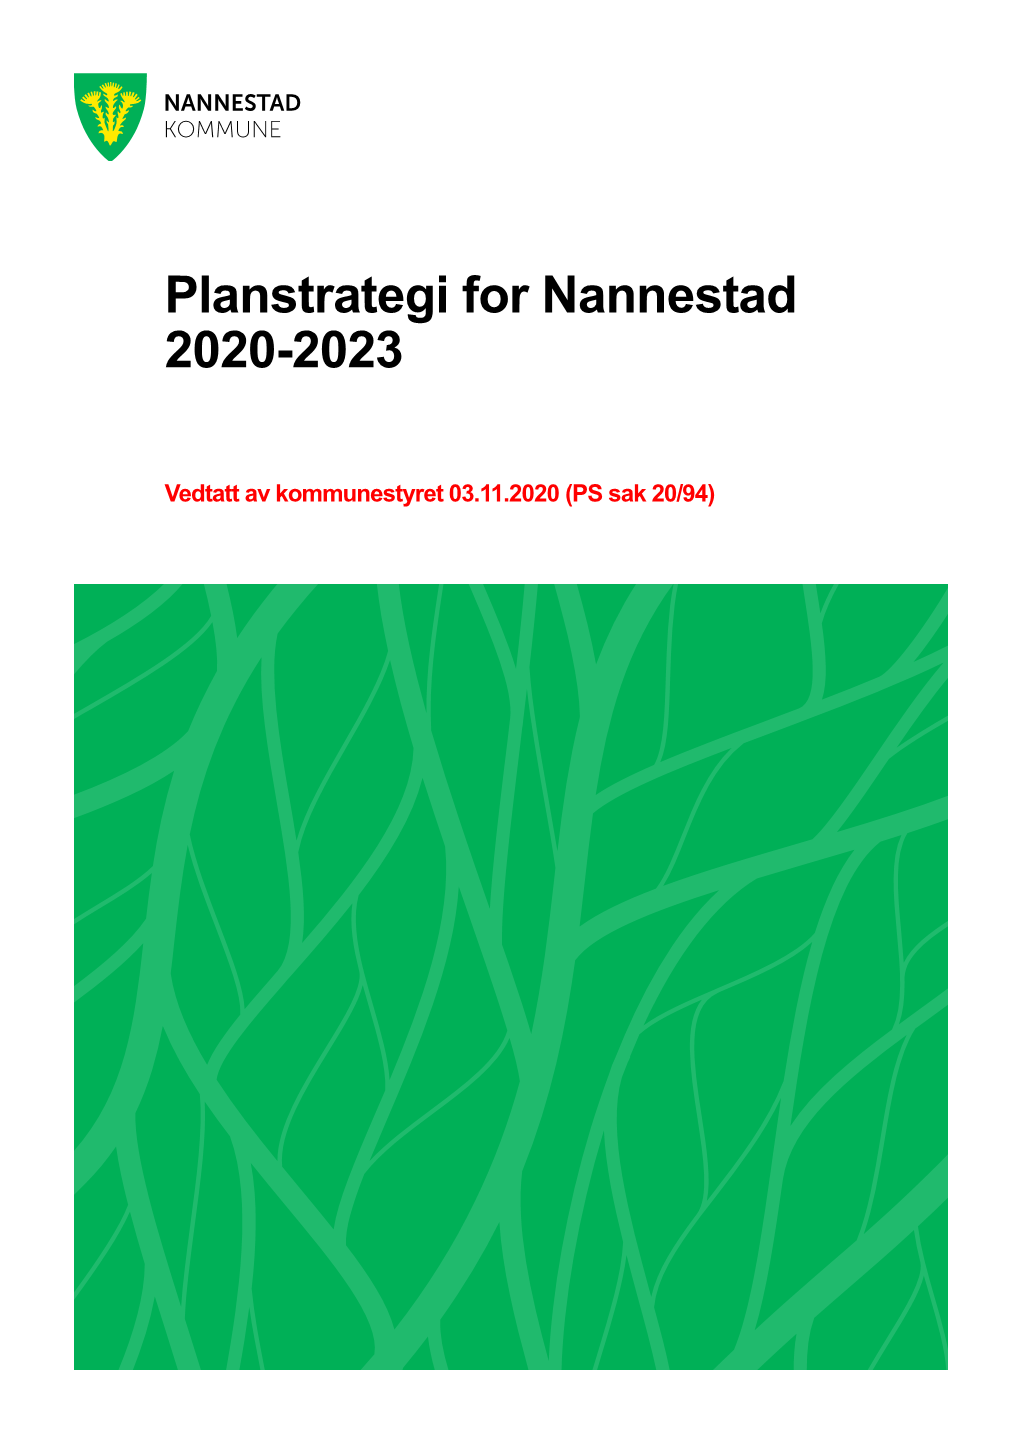 Planstrategi for Nannestad 2020-2023